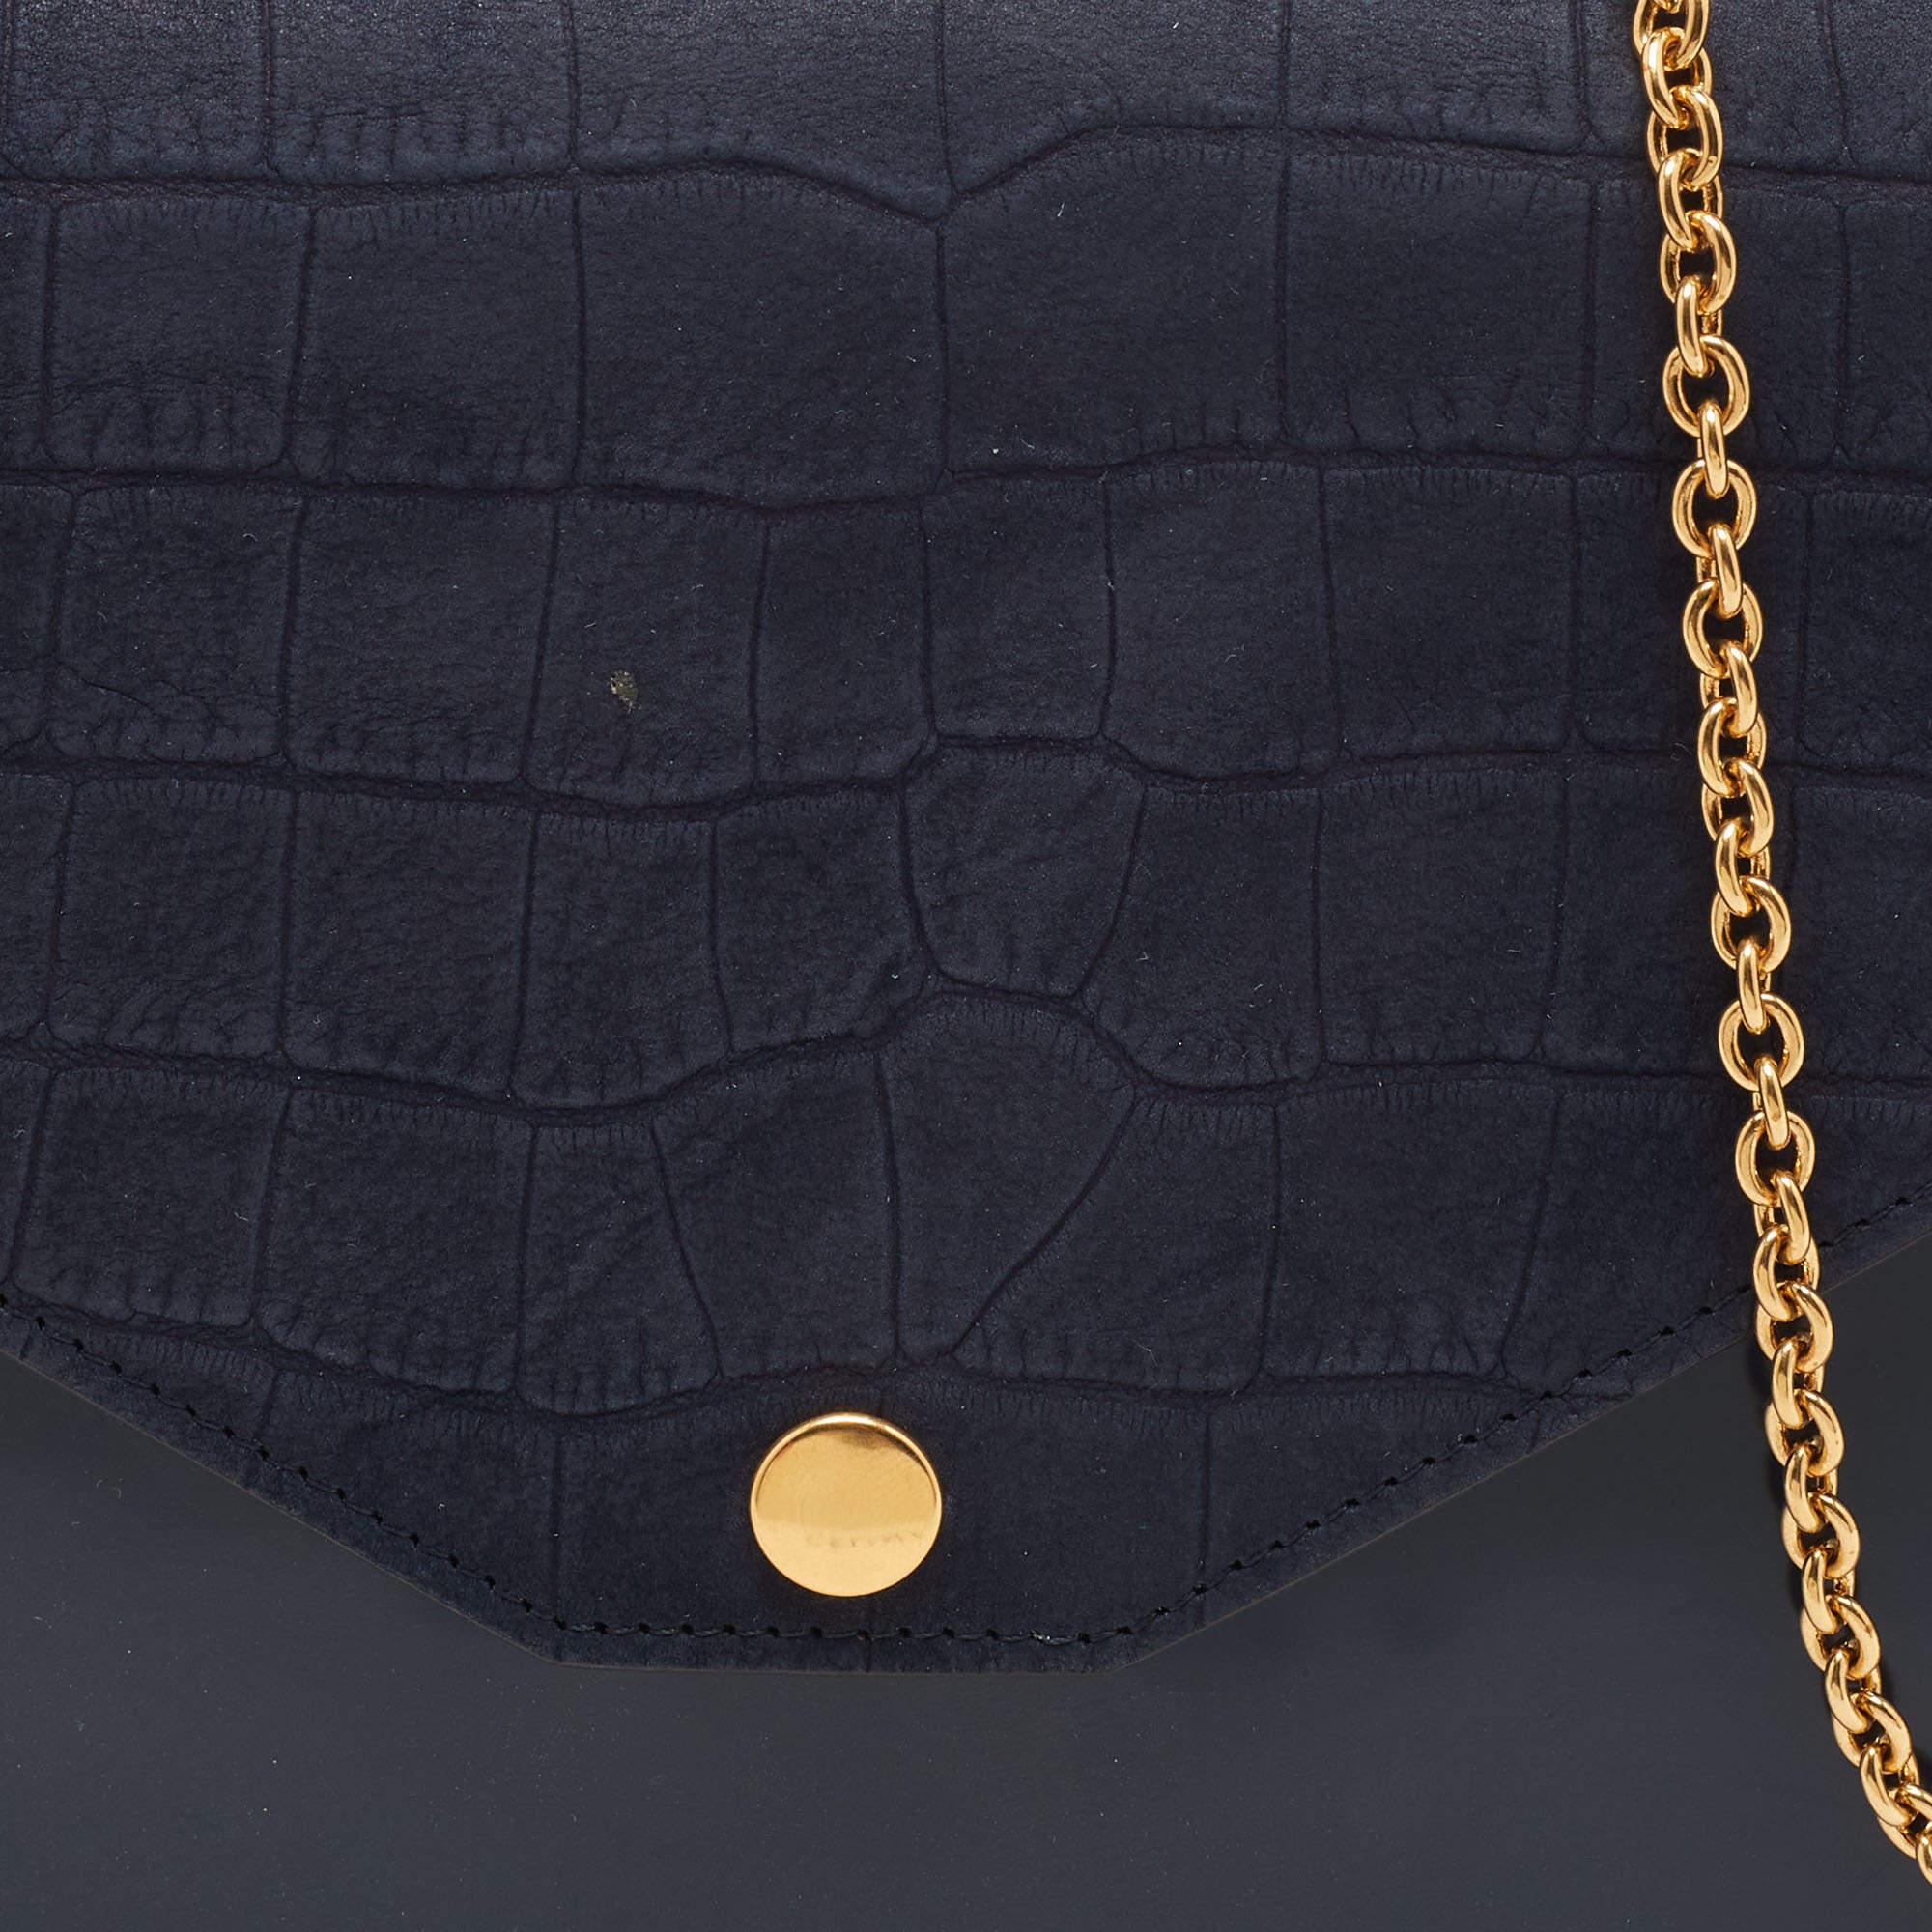 Celine Navy Blue/Black Croc Embossed and Leather Pocket Envelope Chain Clutch 7